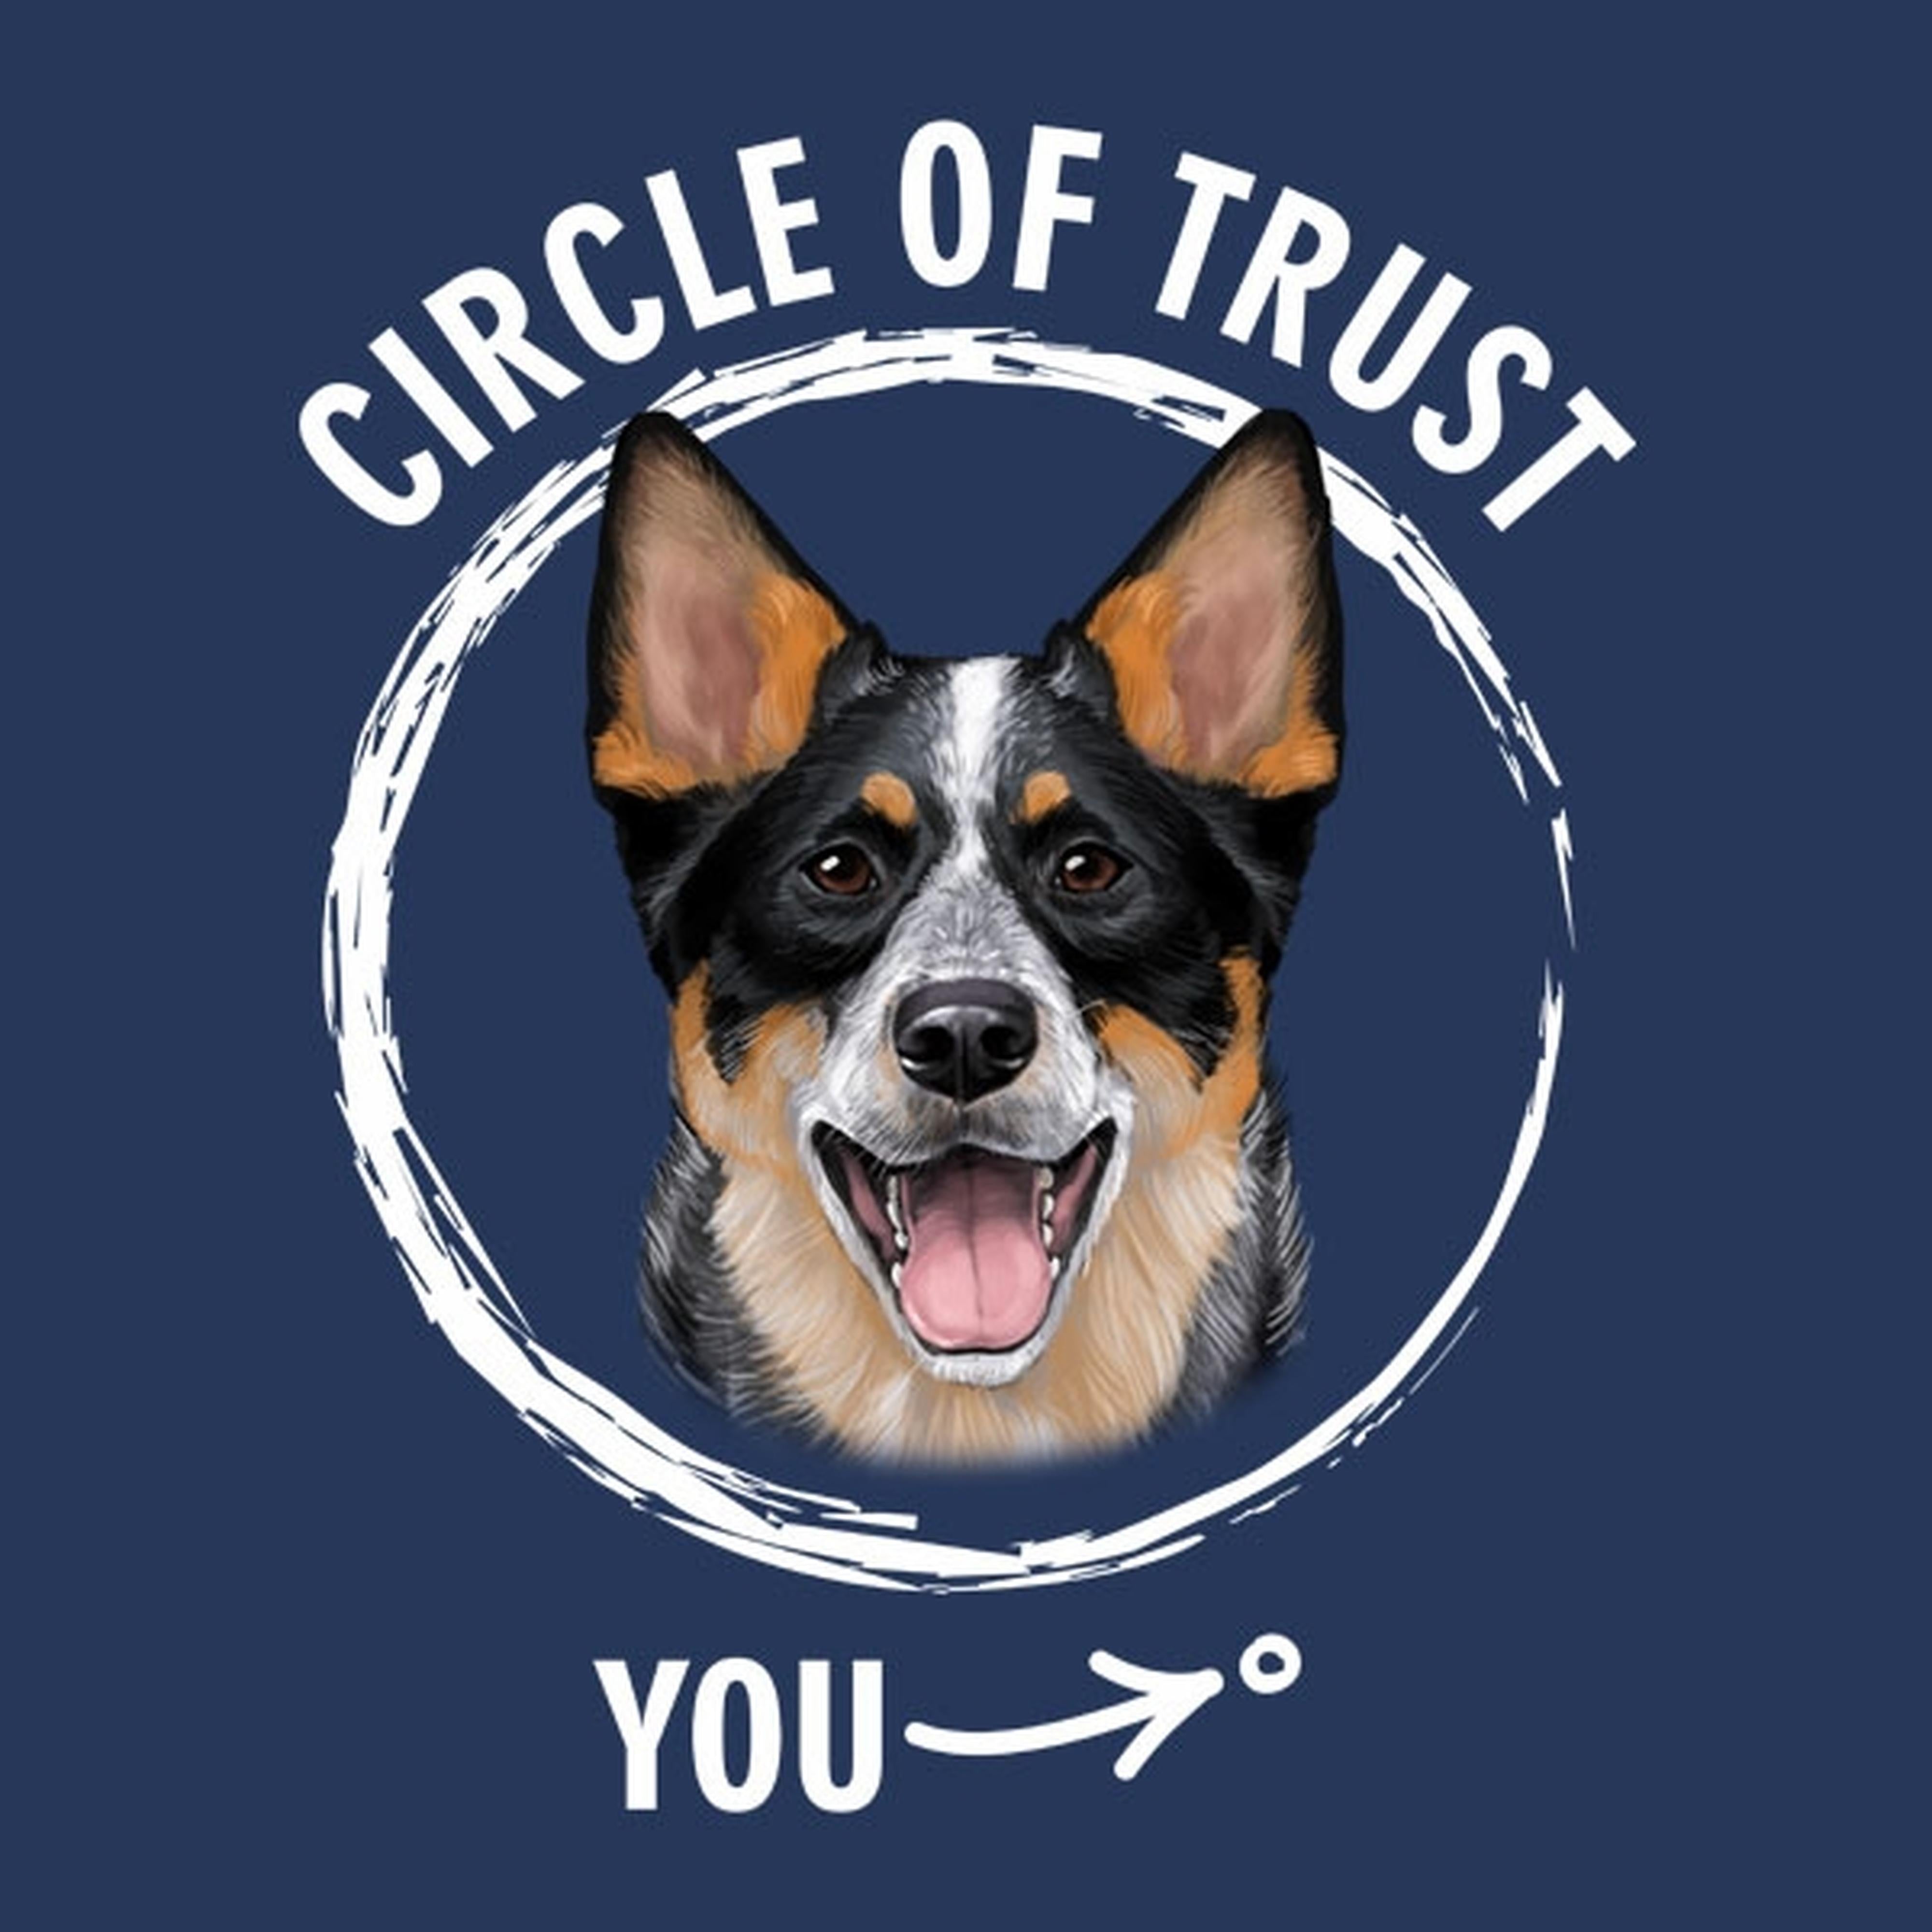 Circle of trust (Australian Cattle dog) - T-shirt